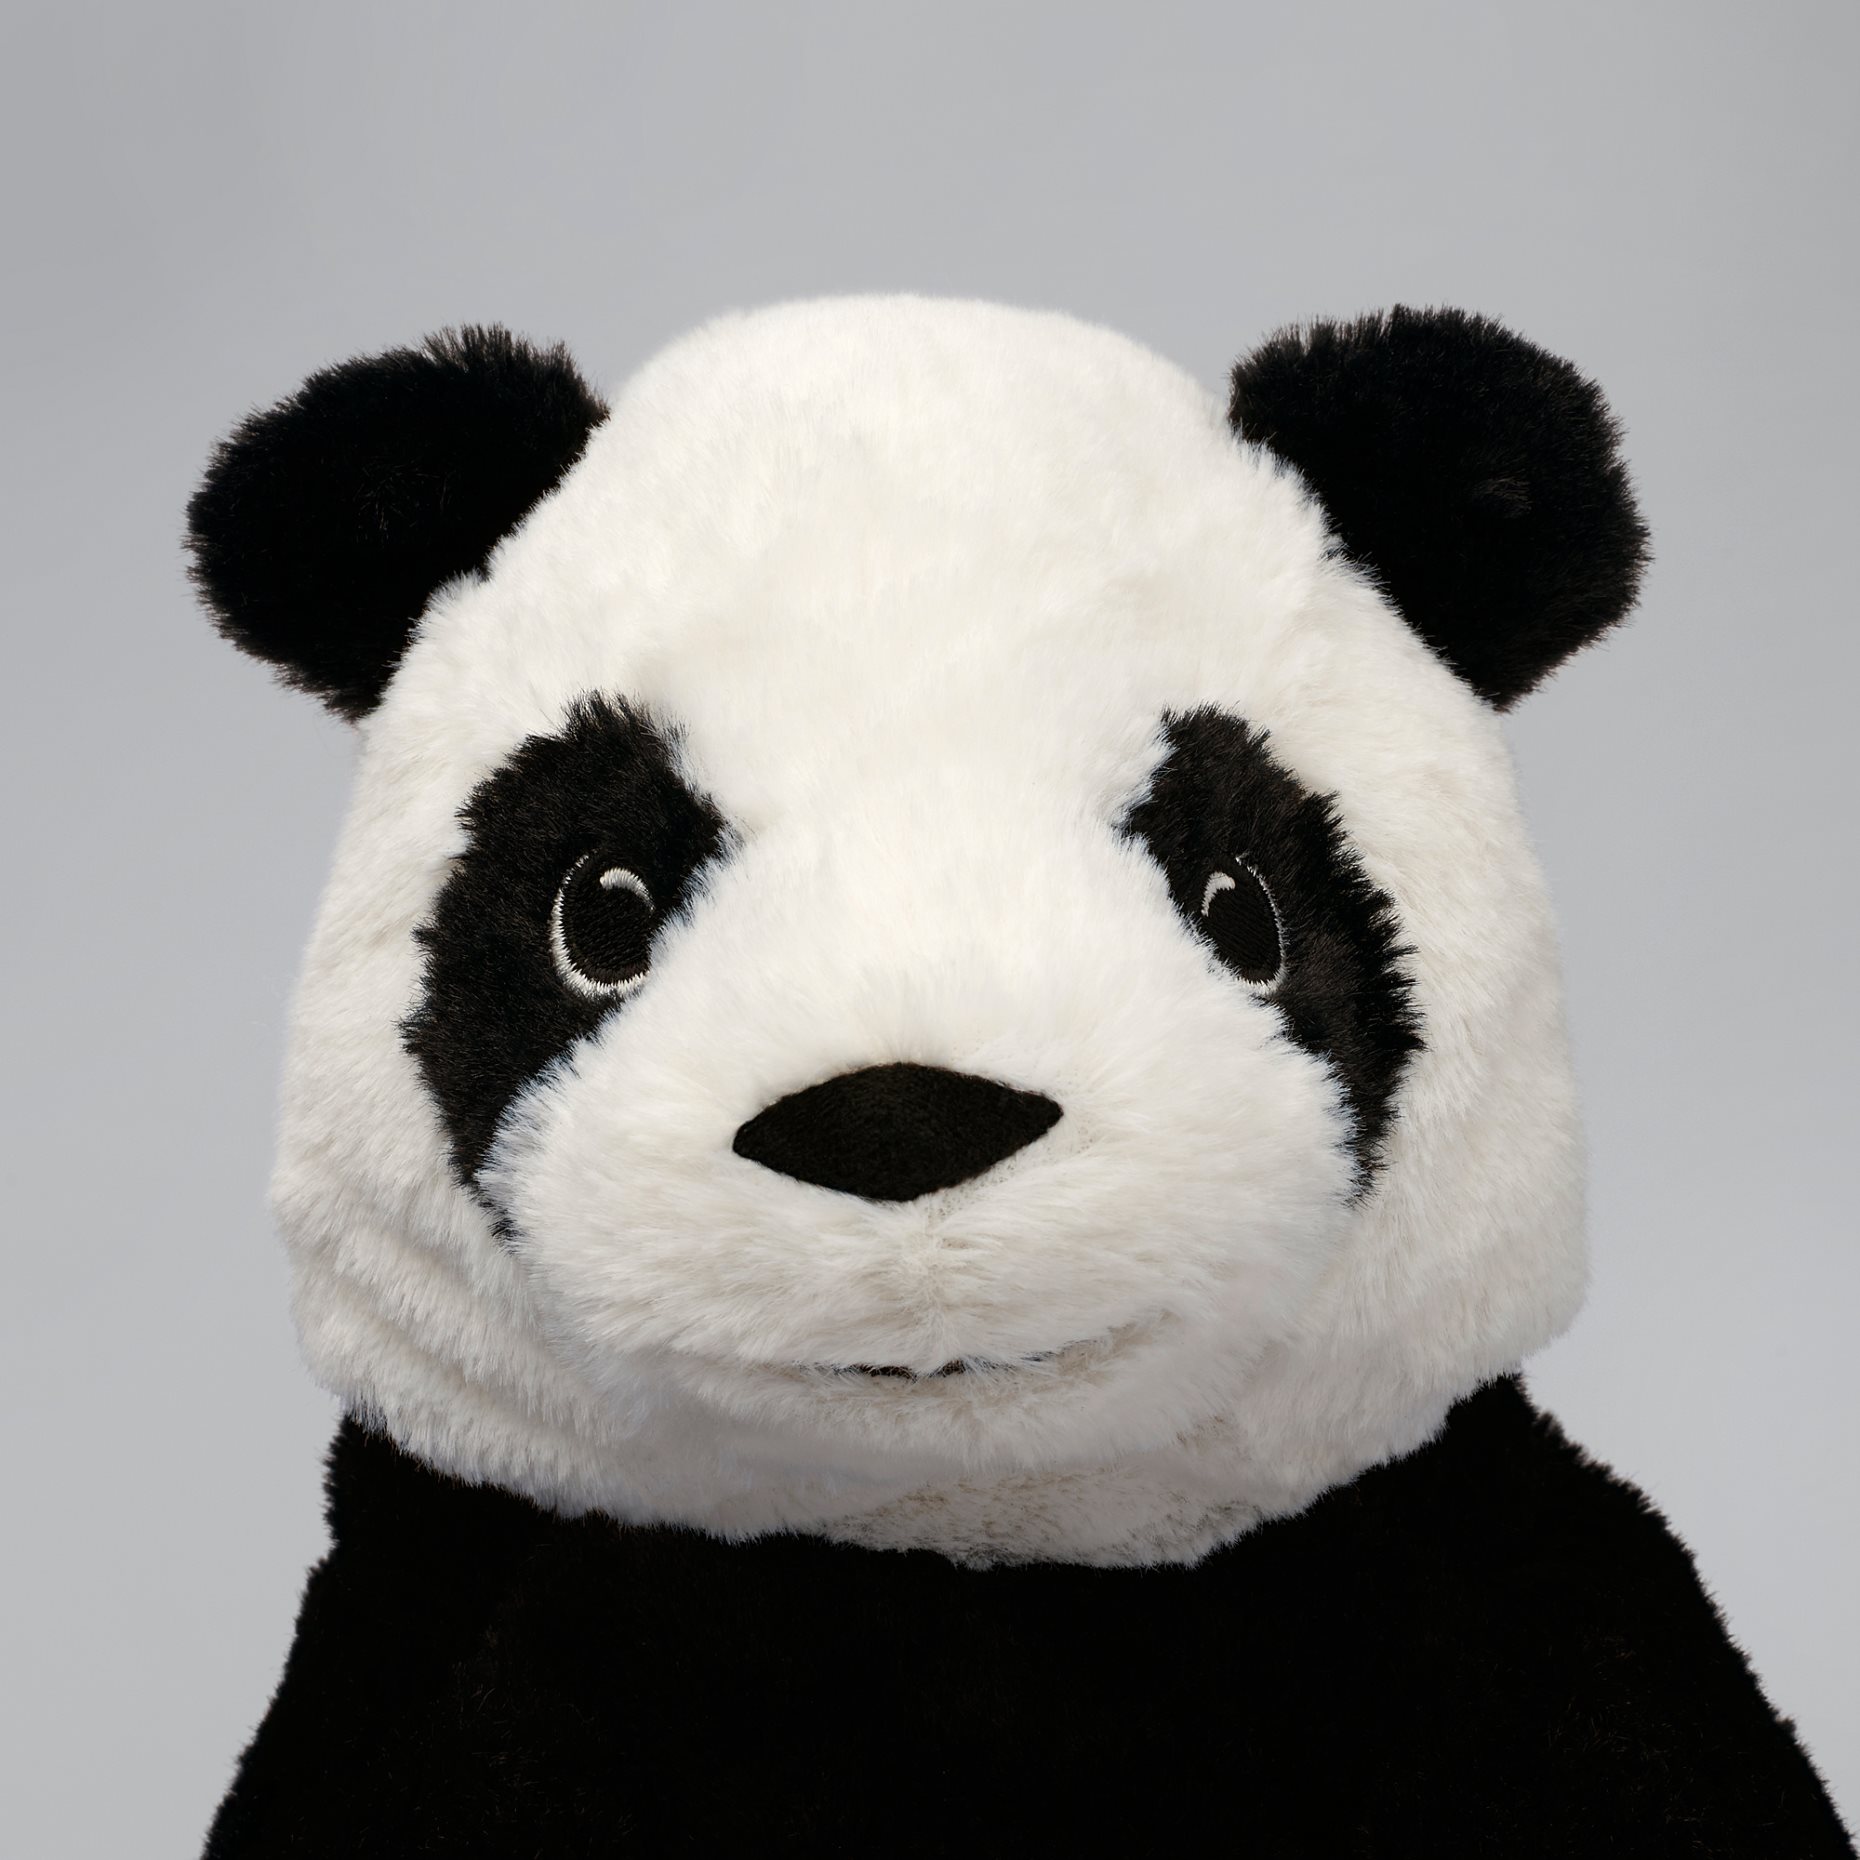 KRAMIG, плюшена играчка панда, 302.213.16